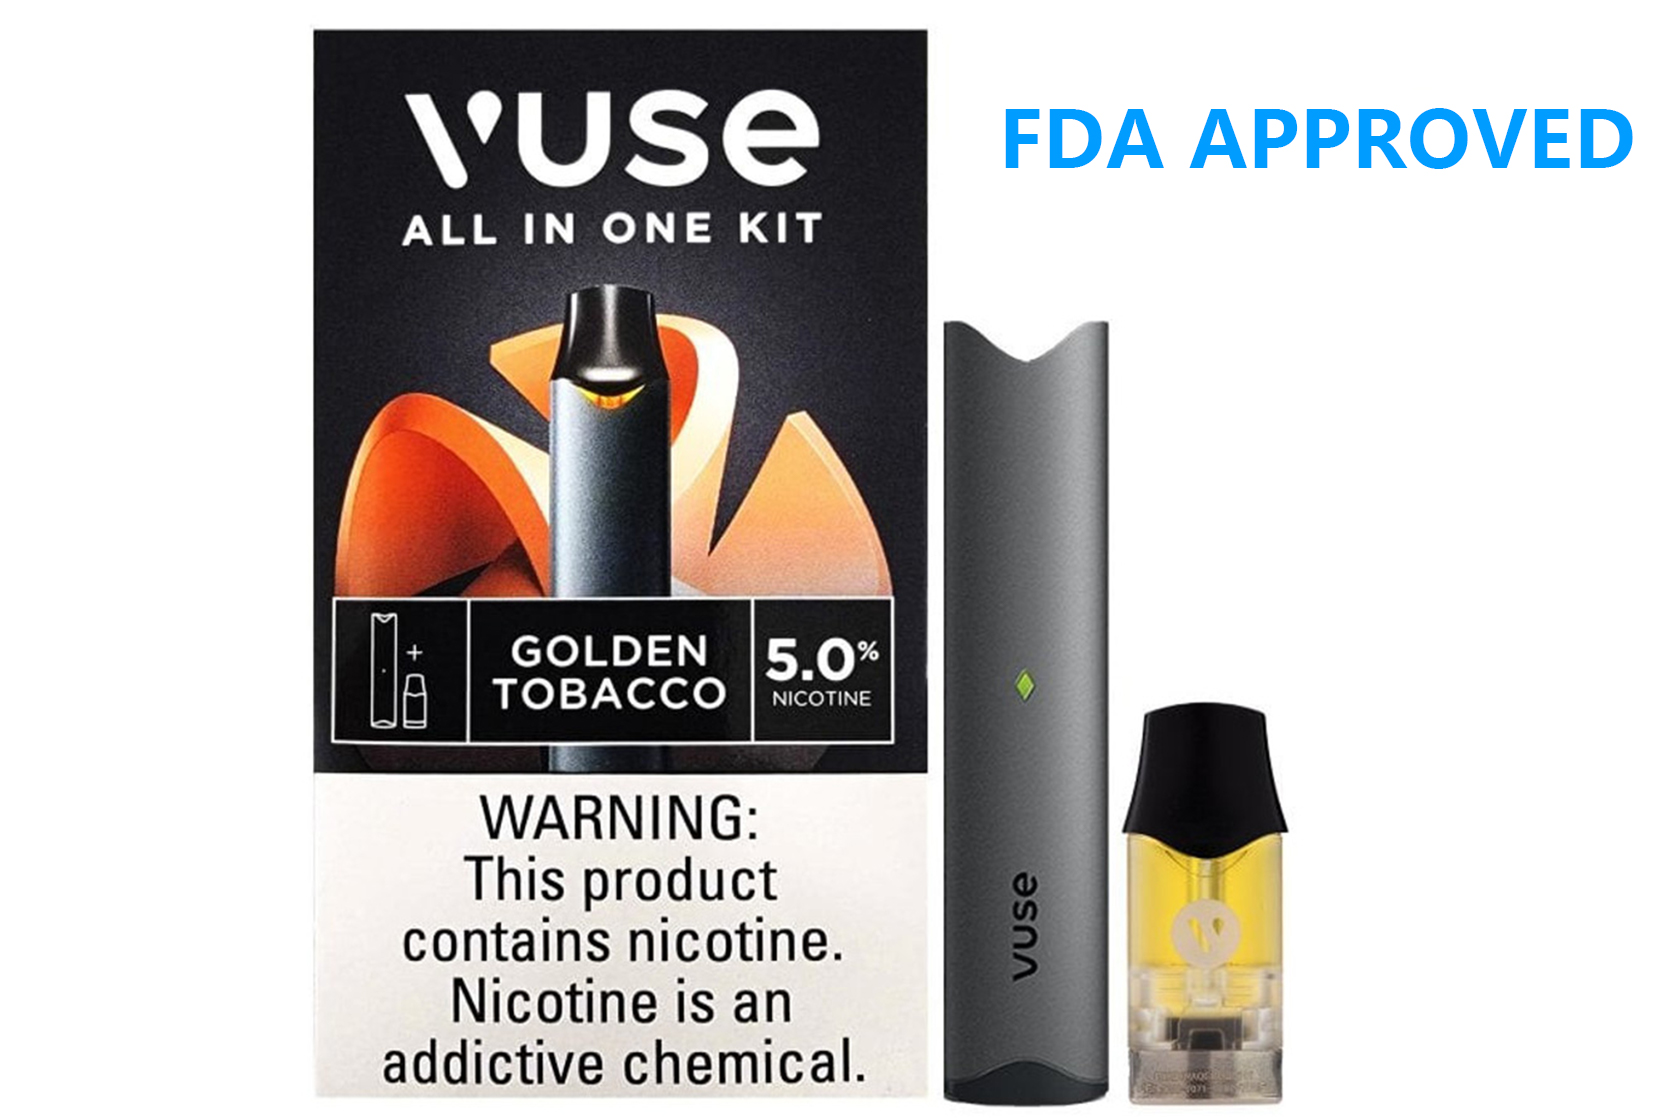 FDA Authorizes Vuse Alto, Popular Tobacco Industry Vape